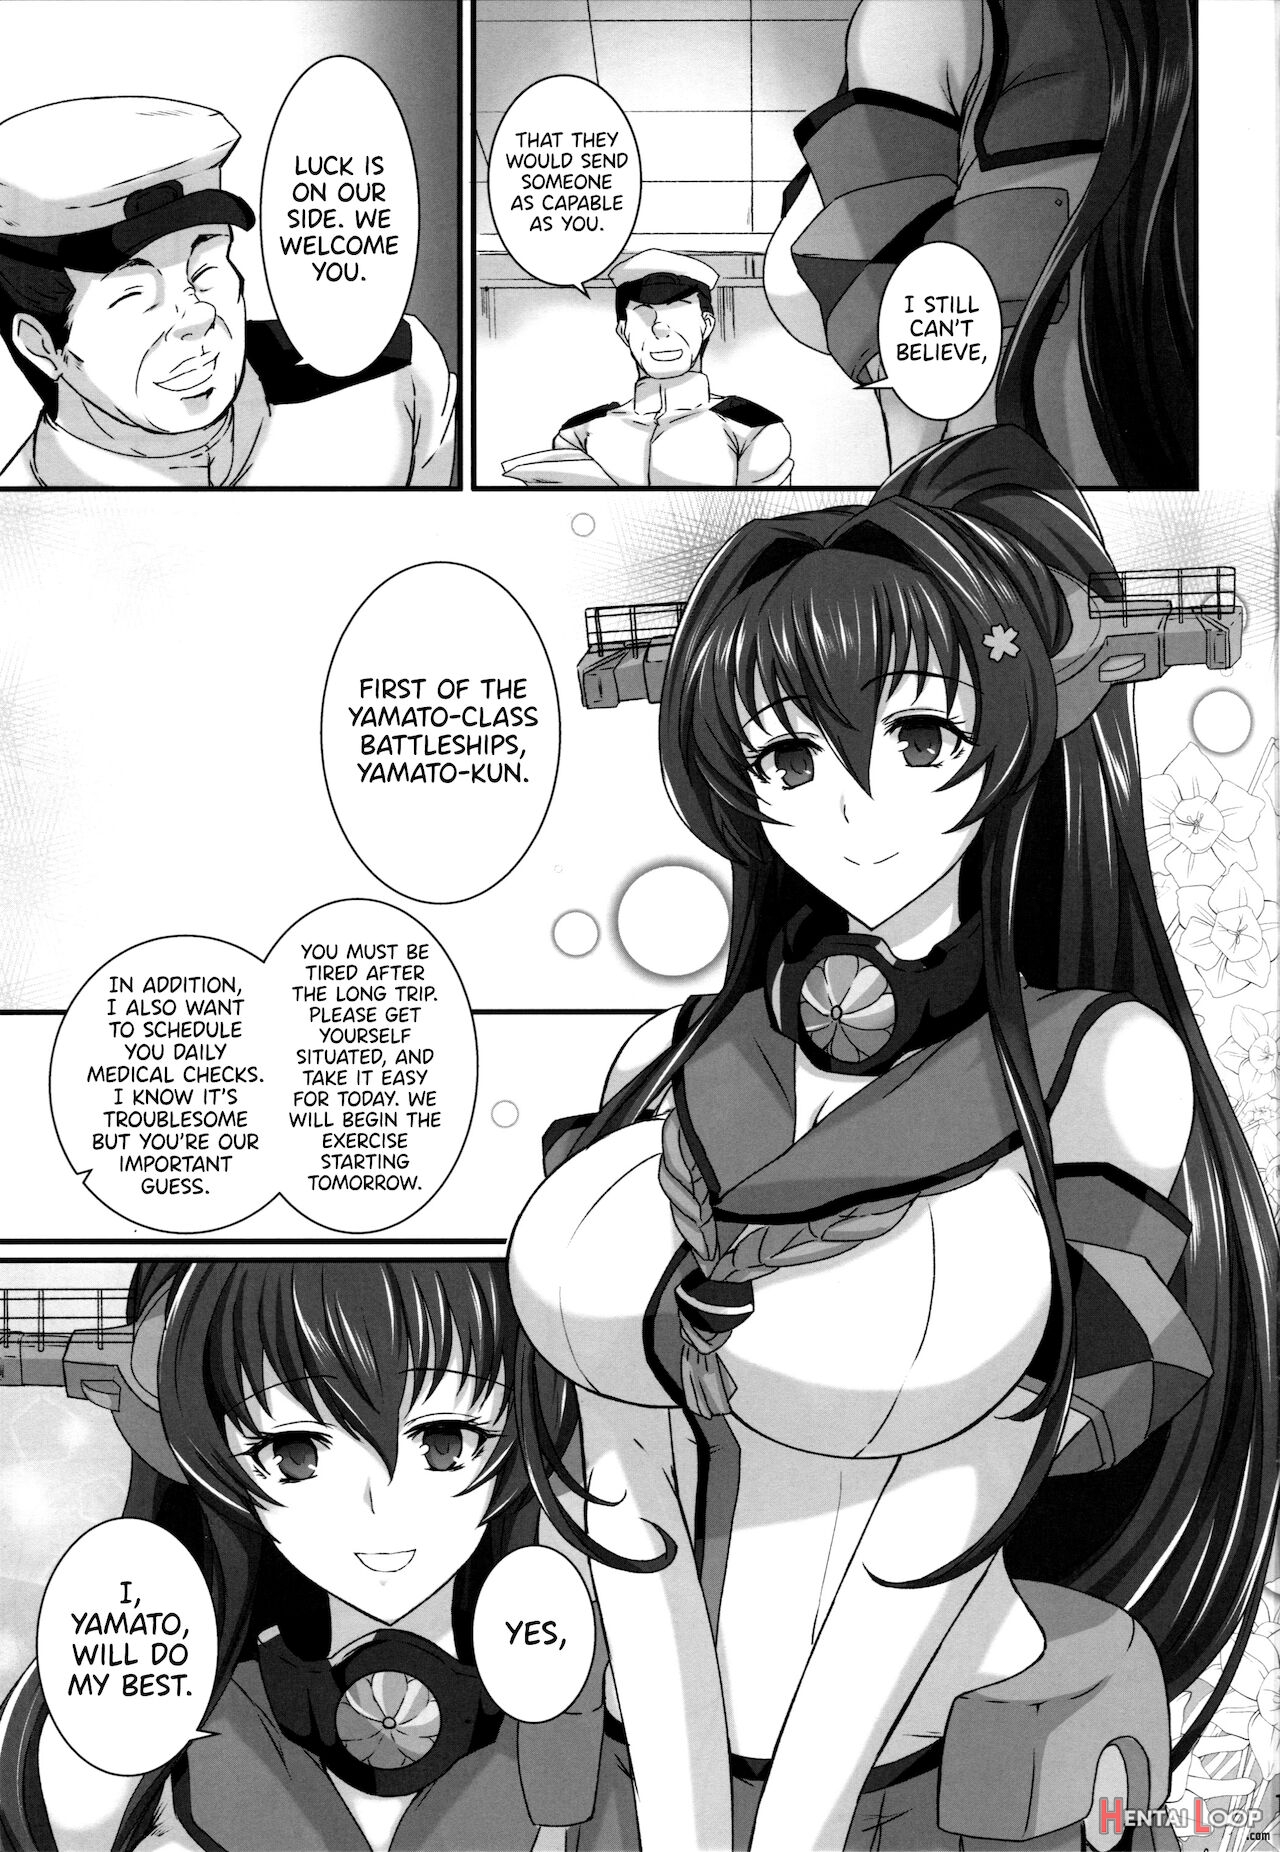 Stolen Battleship Yamato page 2